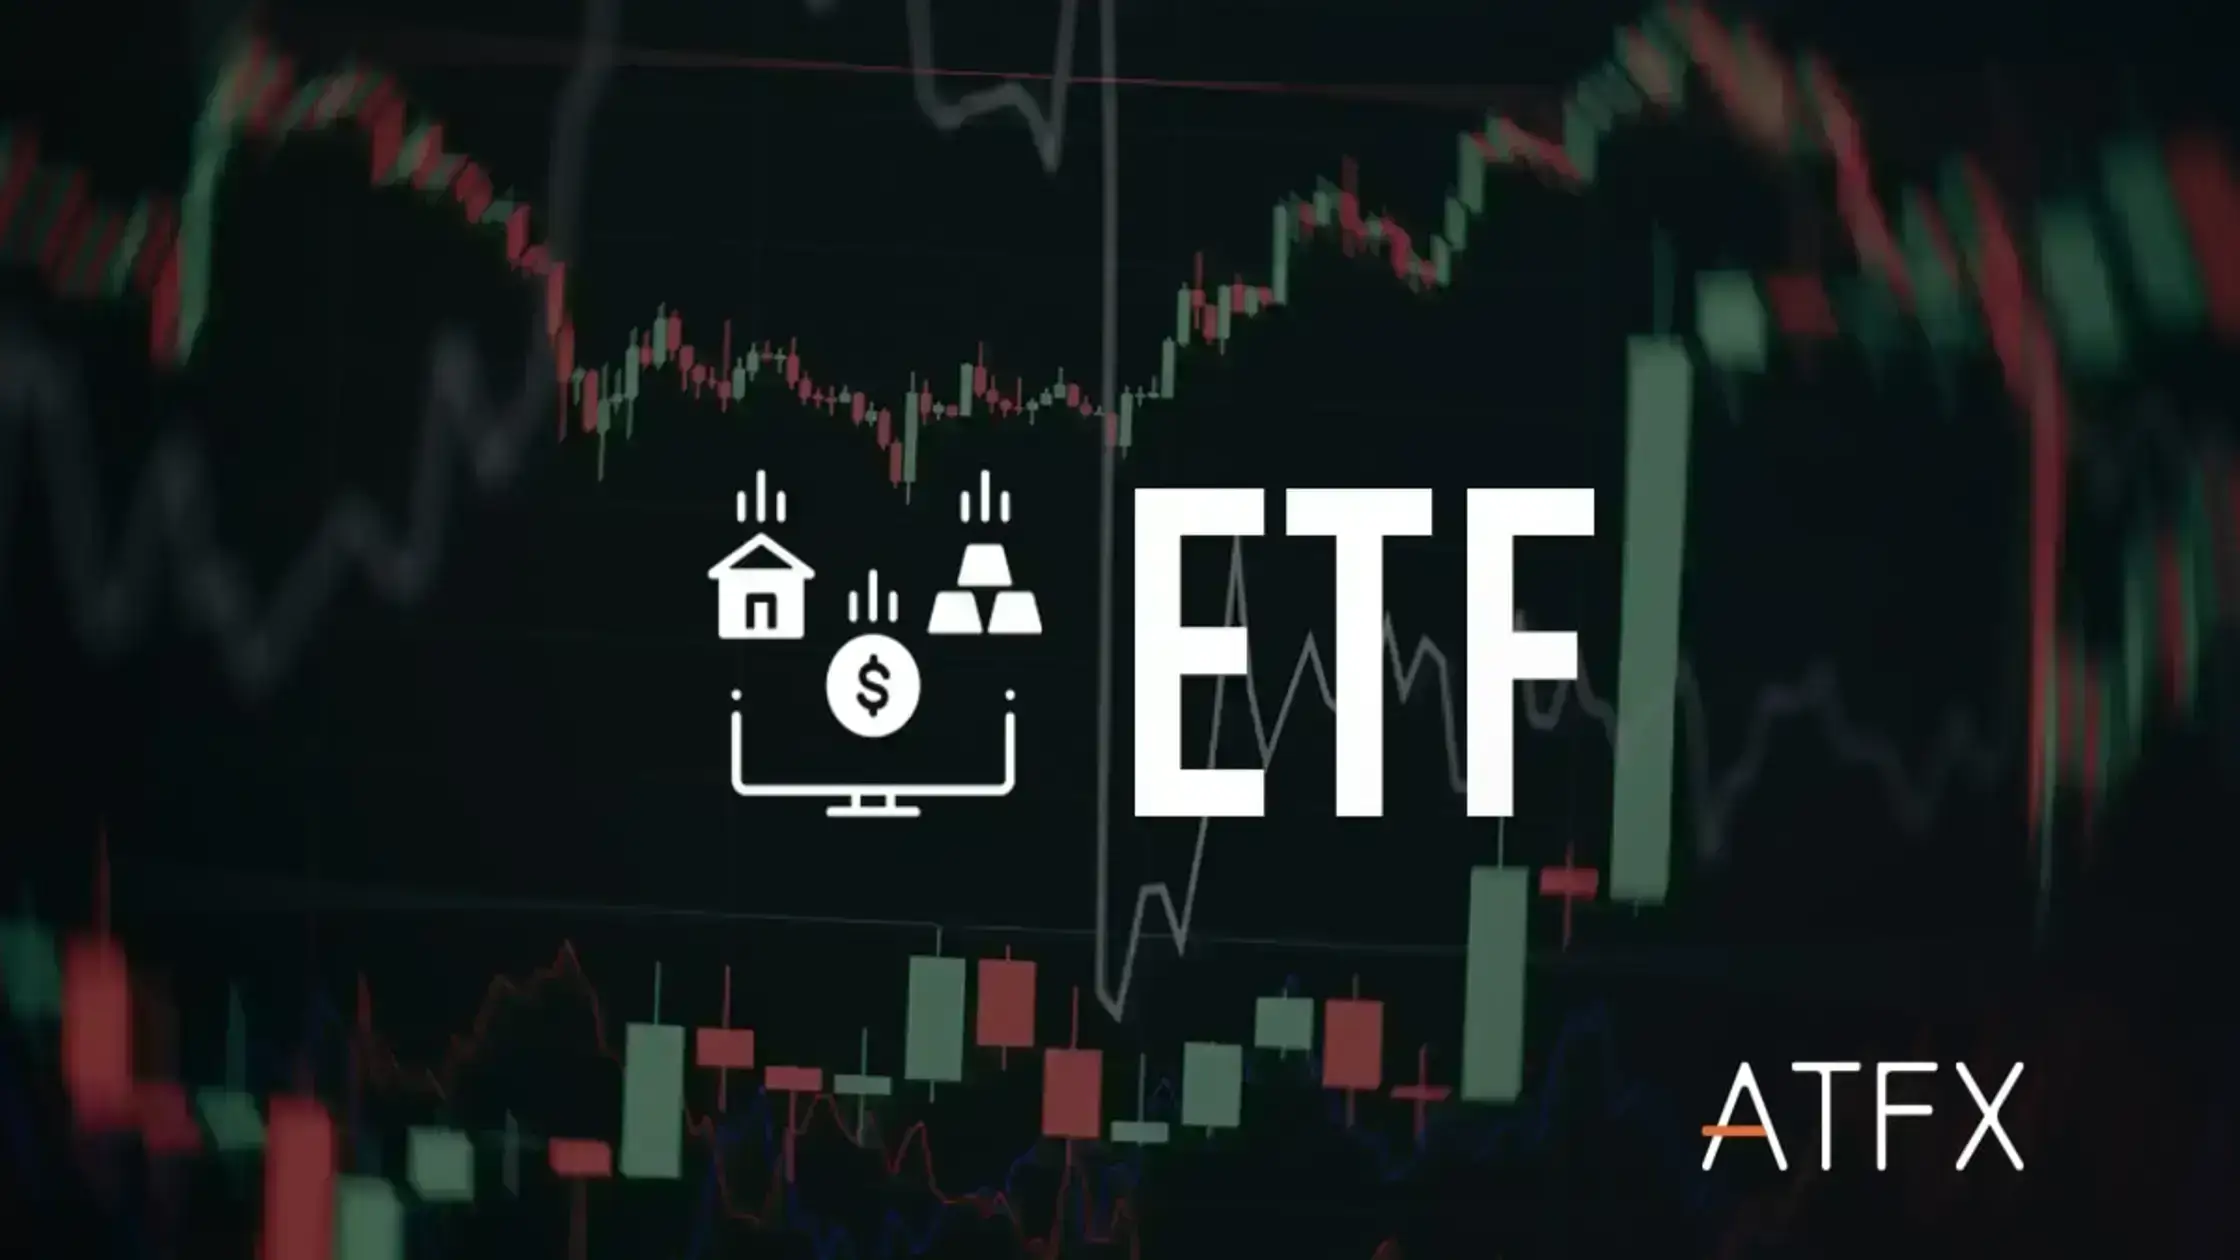 ATFX-ETF-trading_b (1)